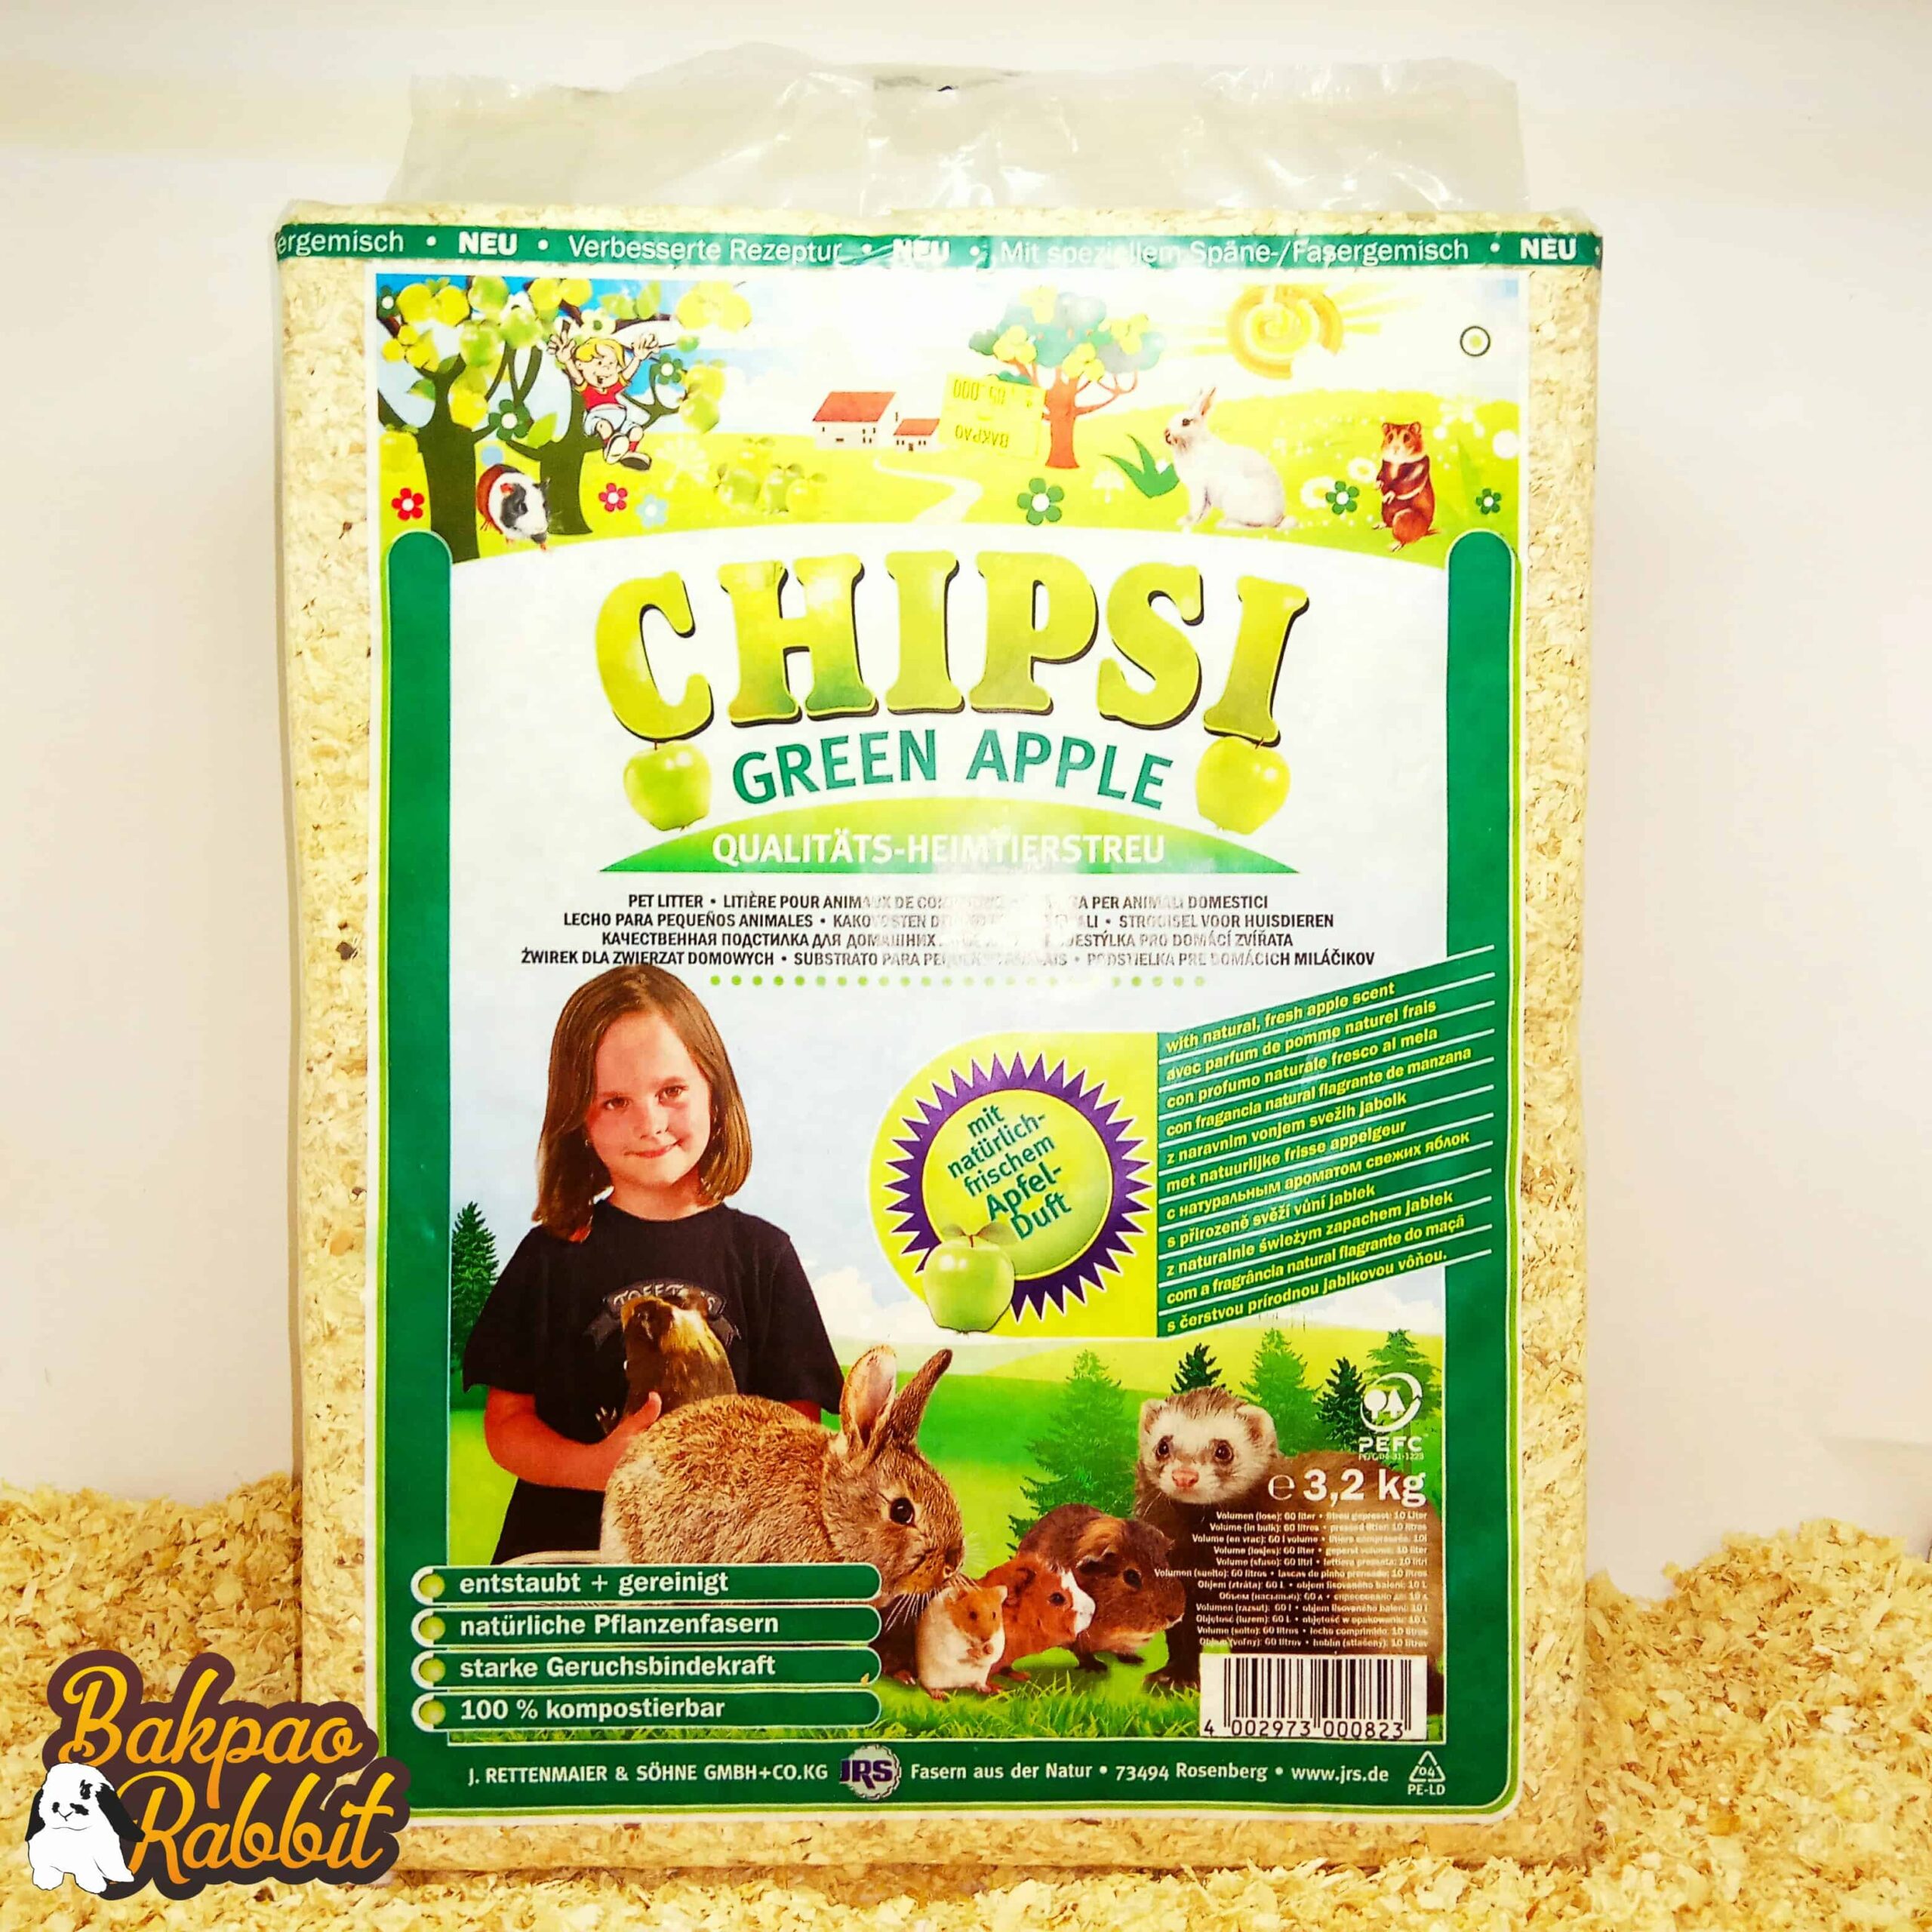 CHIPSI Green Apple Wood Chip Litter 3.2kg